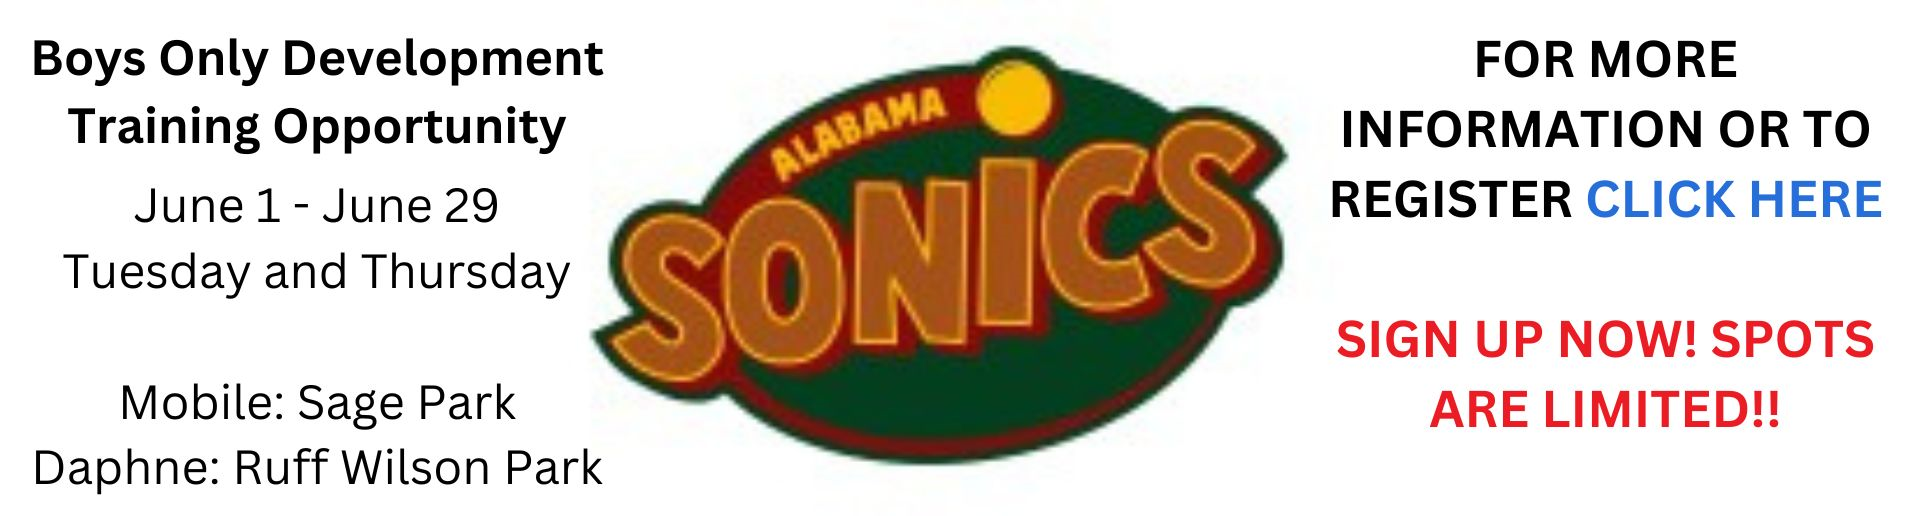 Alabama Sonics June Camp Opportunity